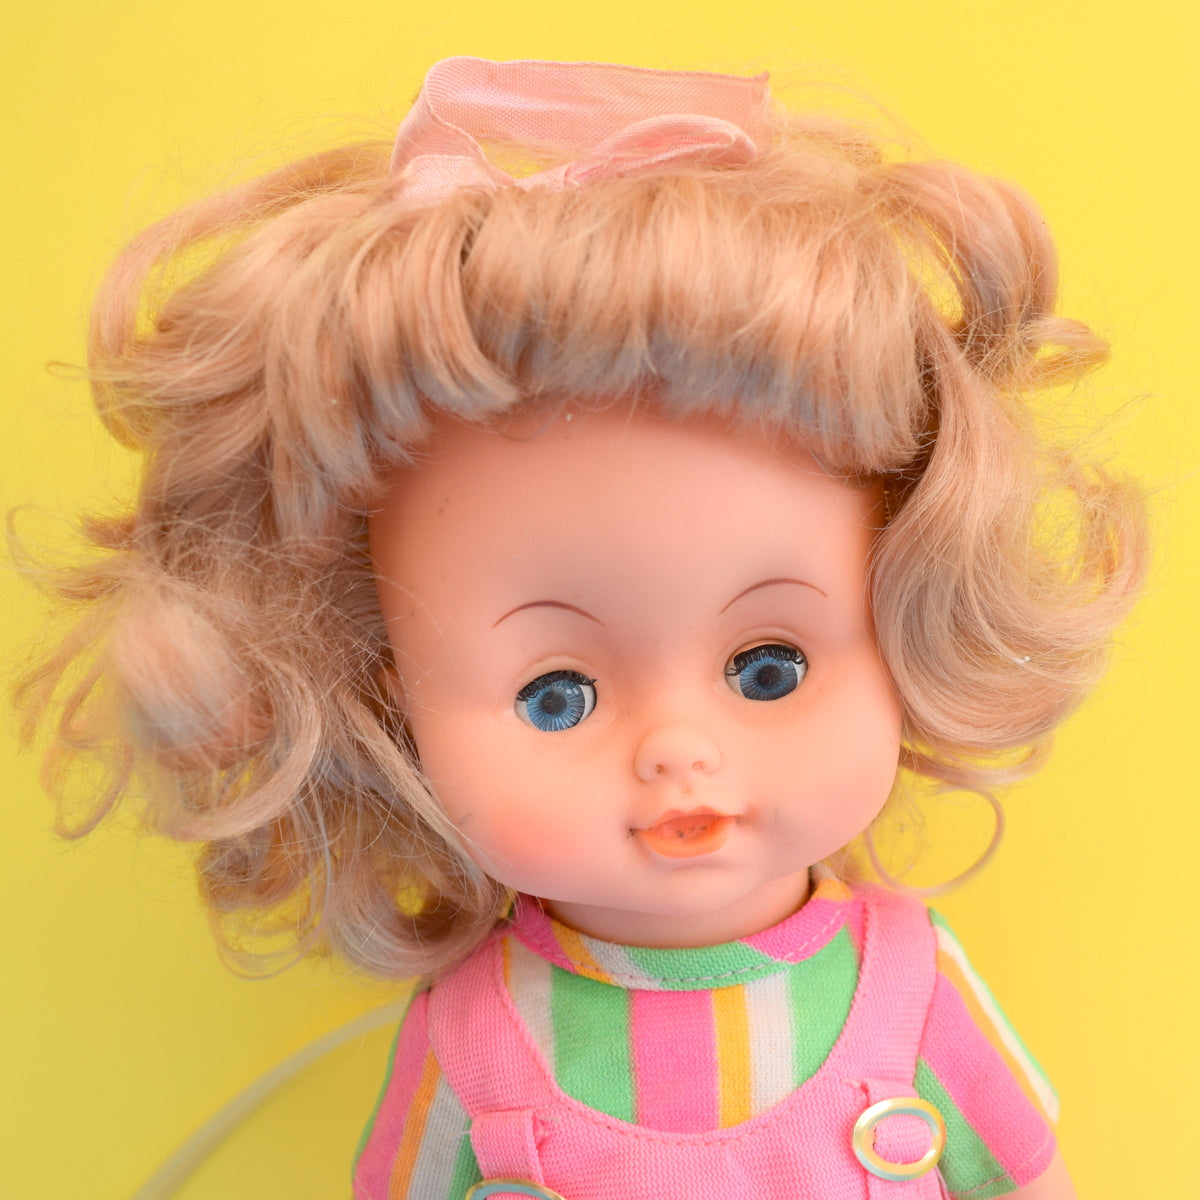 Vintage 1970s Penny Walker Doll - Air Powered